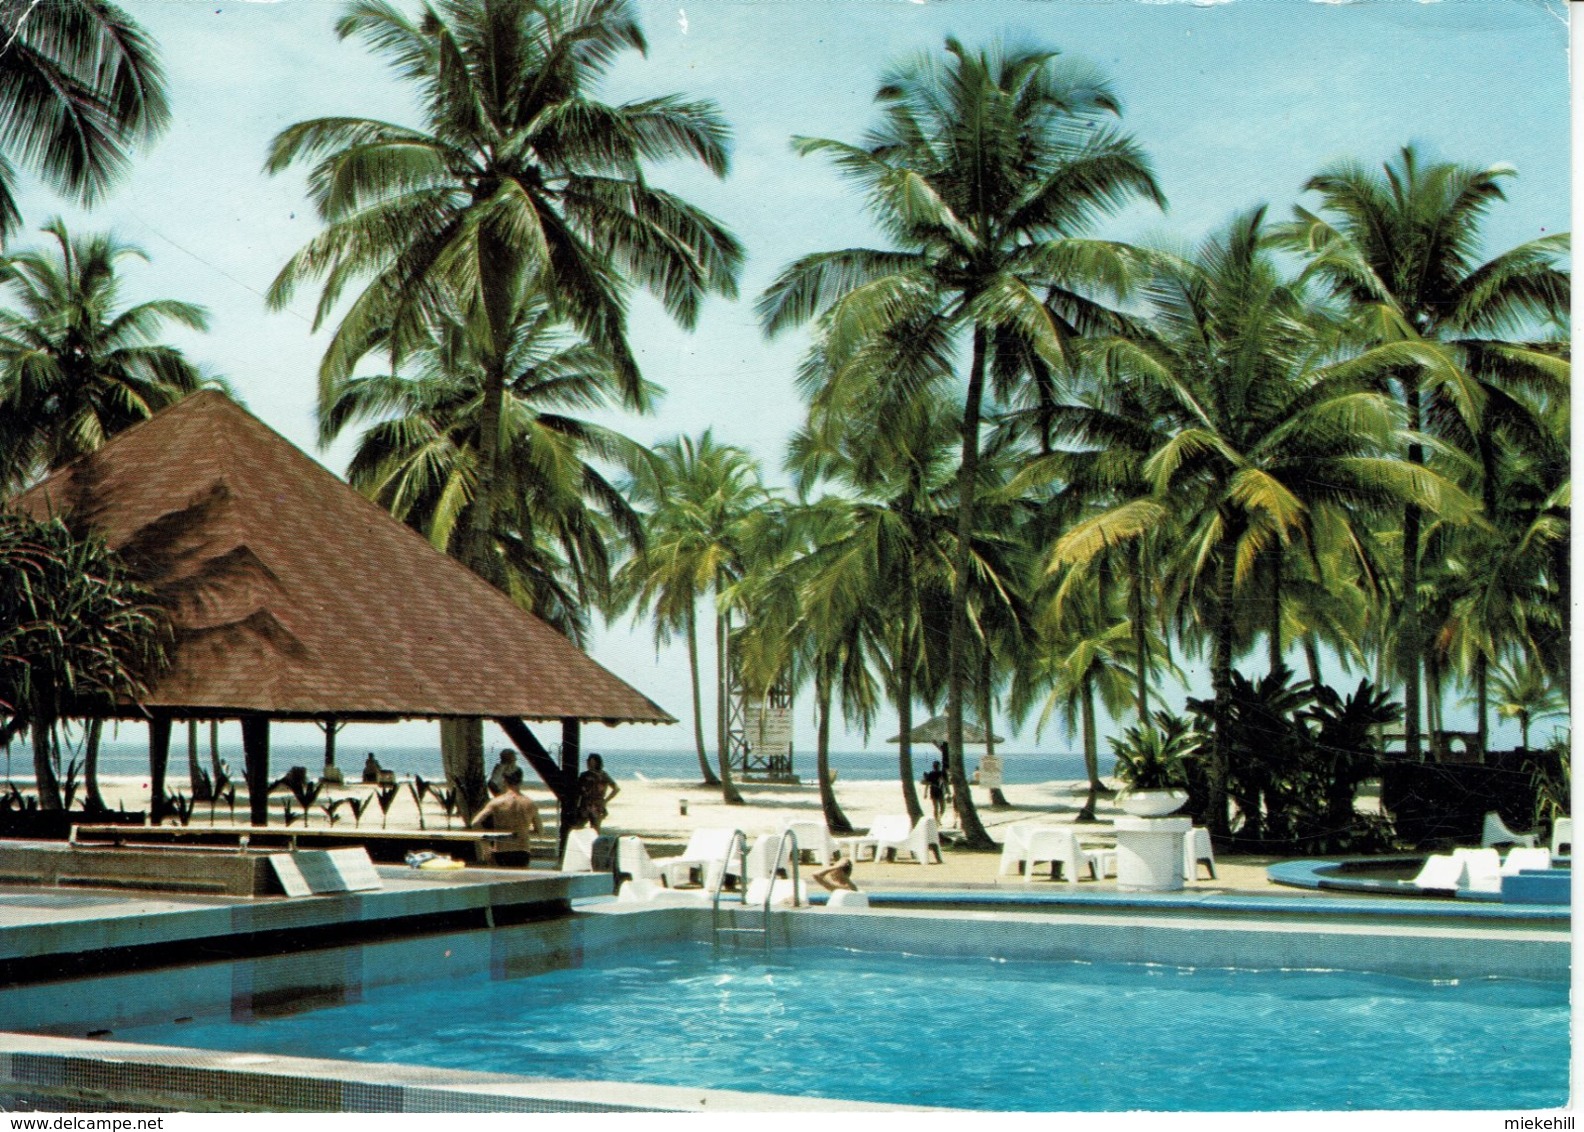 Ivory Coast ASSINIE-COTE D'IVOIRE-CLUB de natation-swimming-pool-zwembad